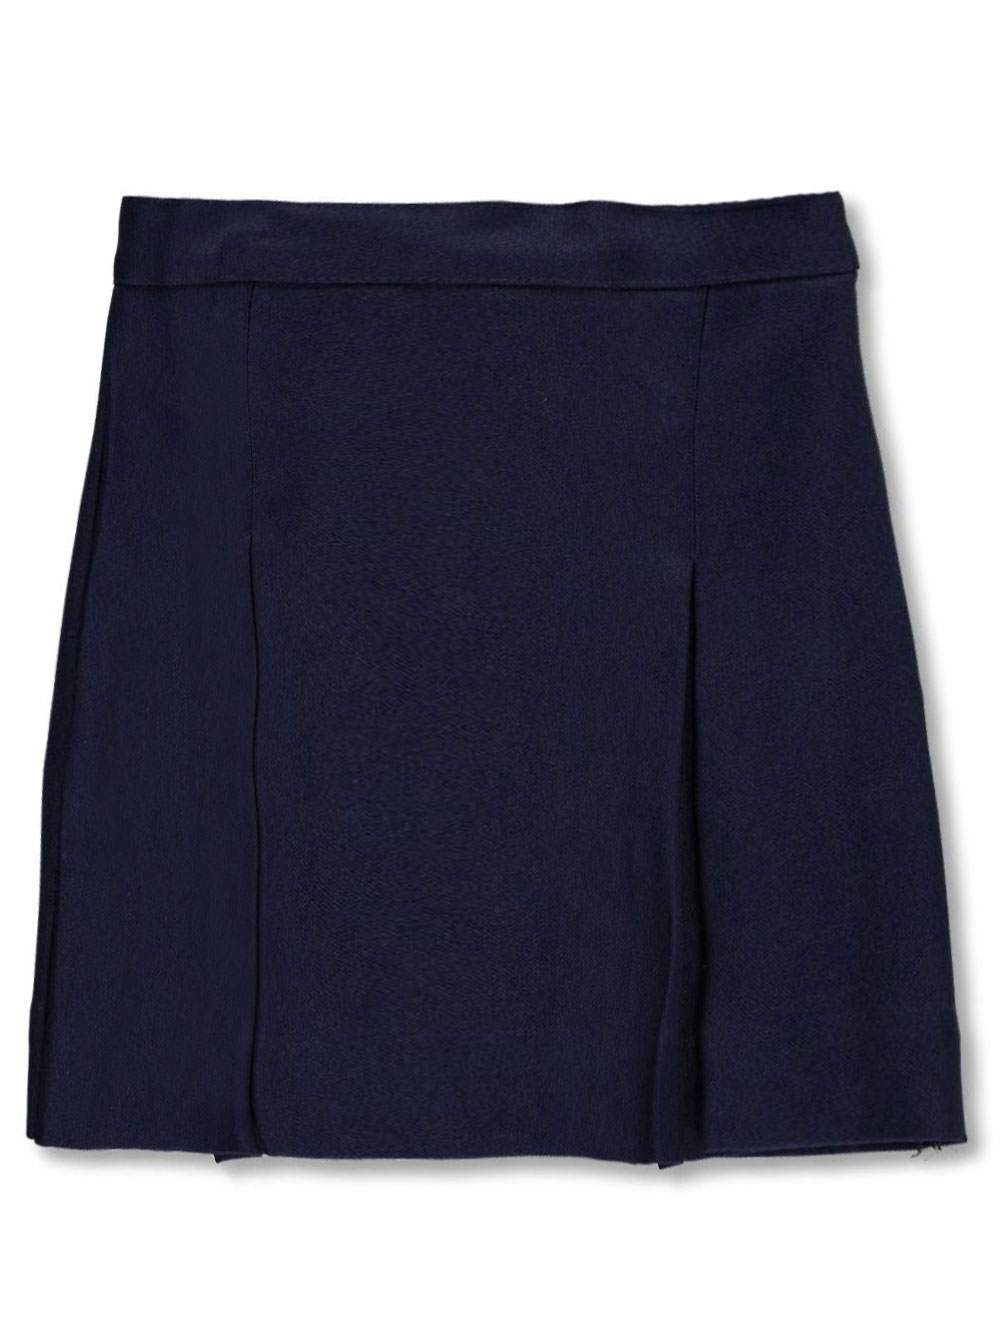 Cookie's Kids Cookie's Girls' Box Pleat Plaid Uniform Skirt